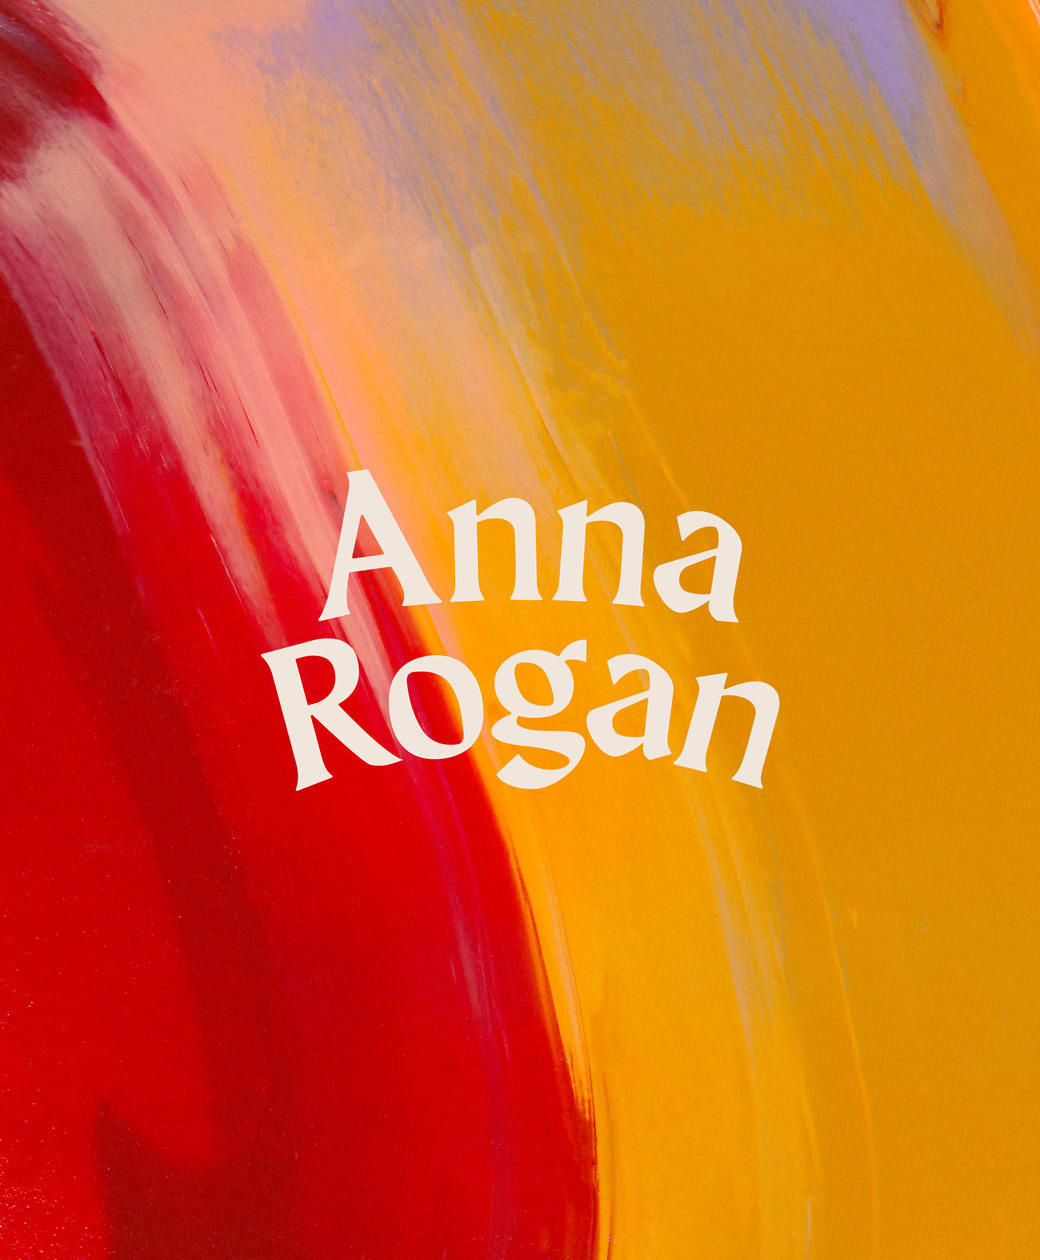 Painted background of the Anna Rogan brand identity logo created for australian based copywriter